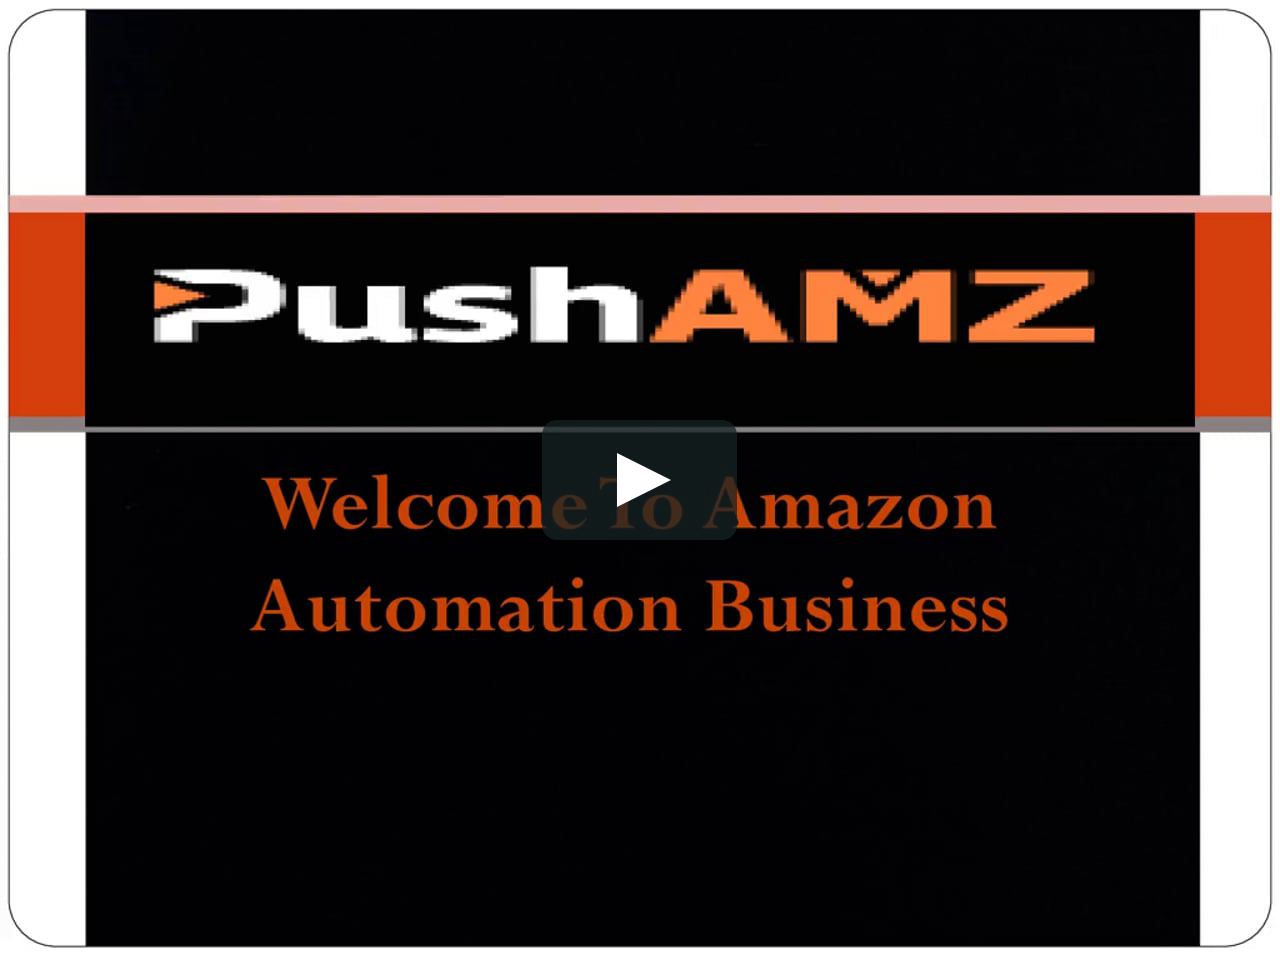 Welcome To Amazon Automation Business - Pushamz